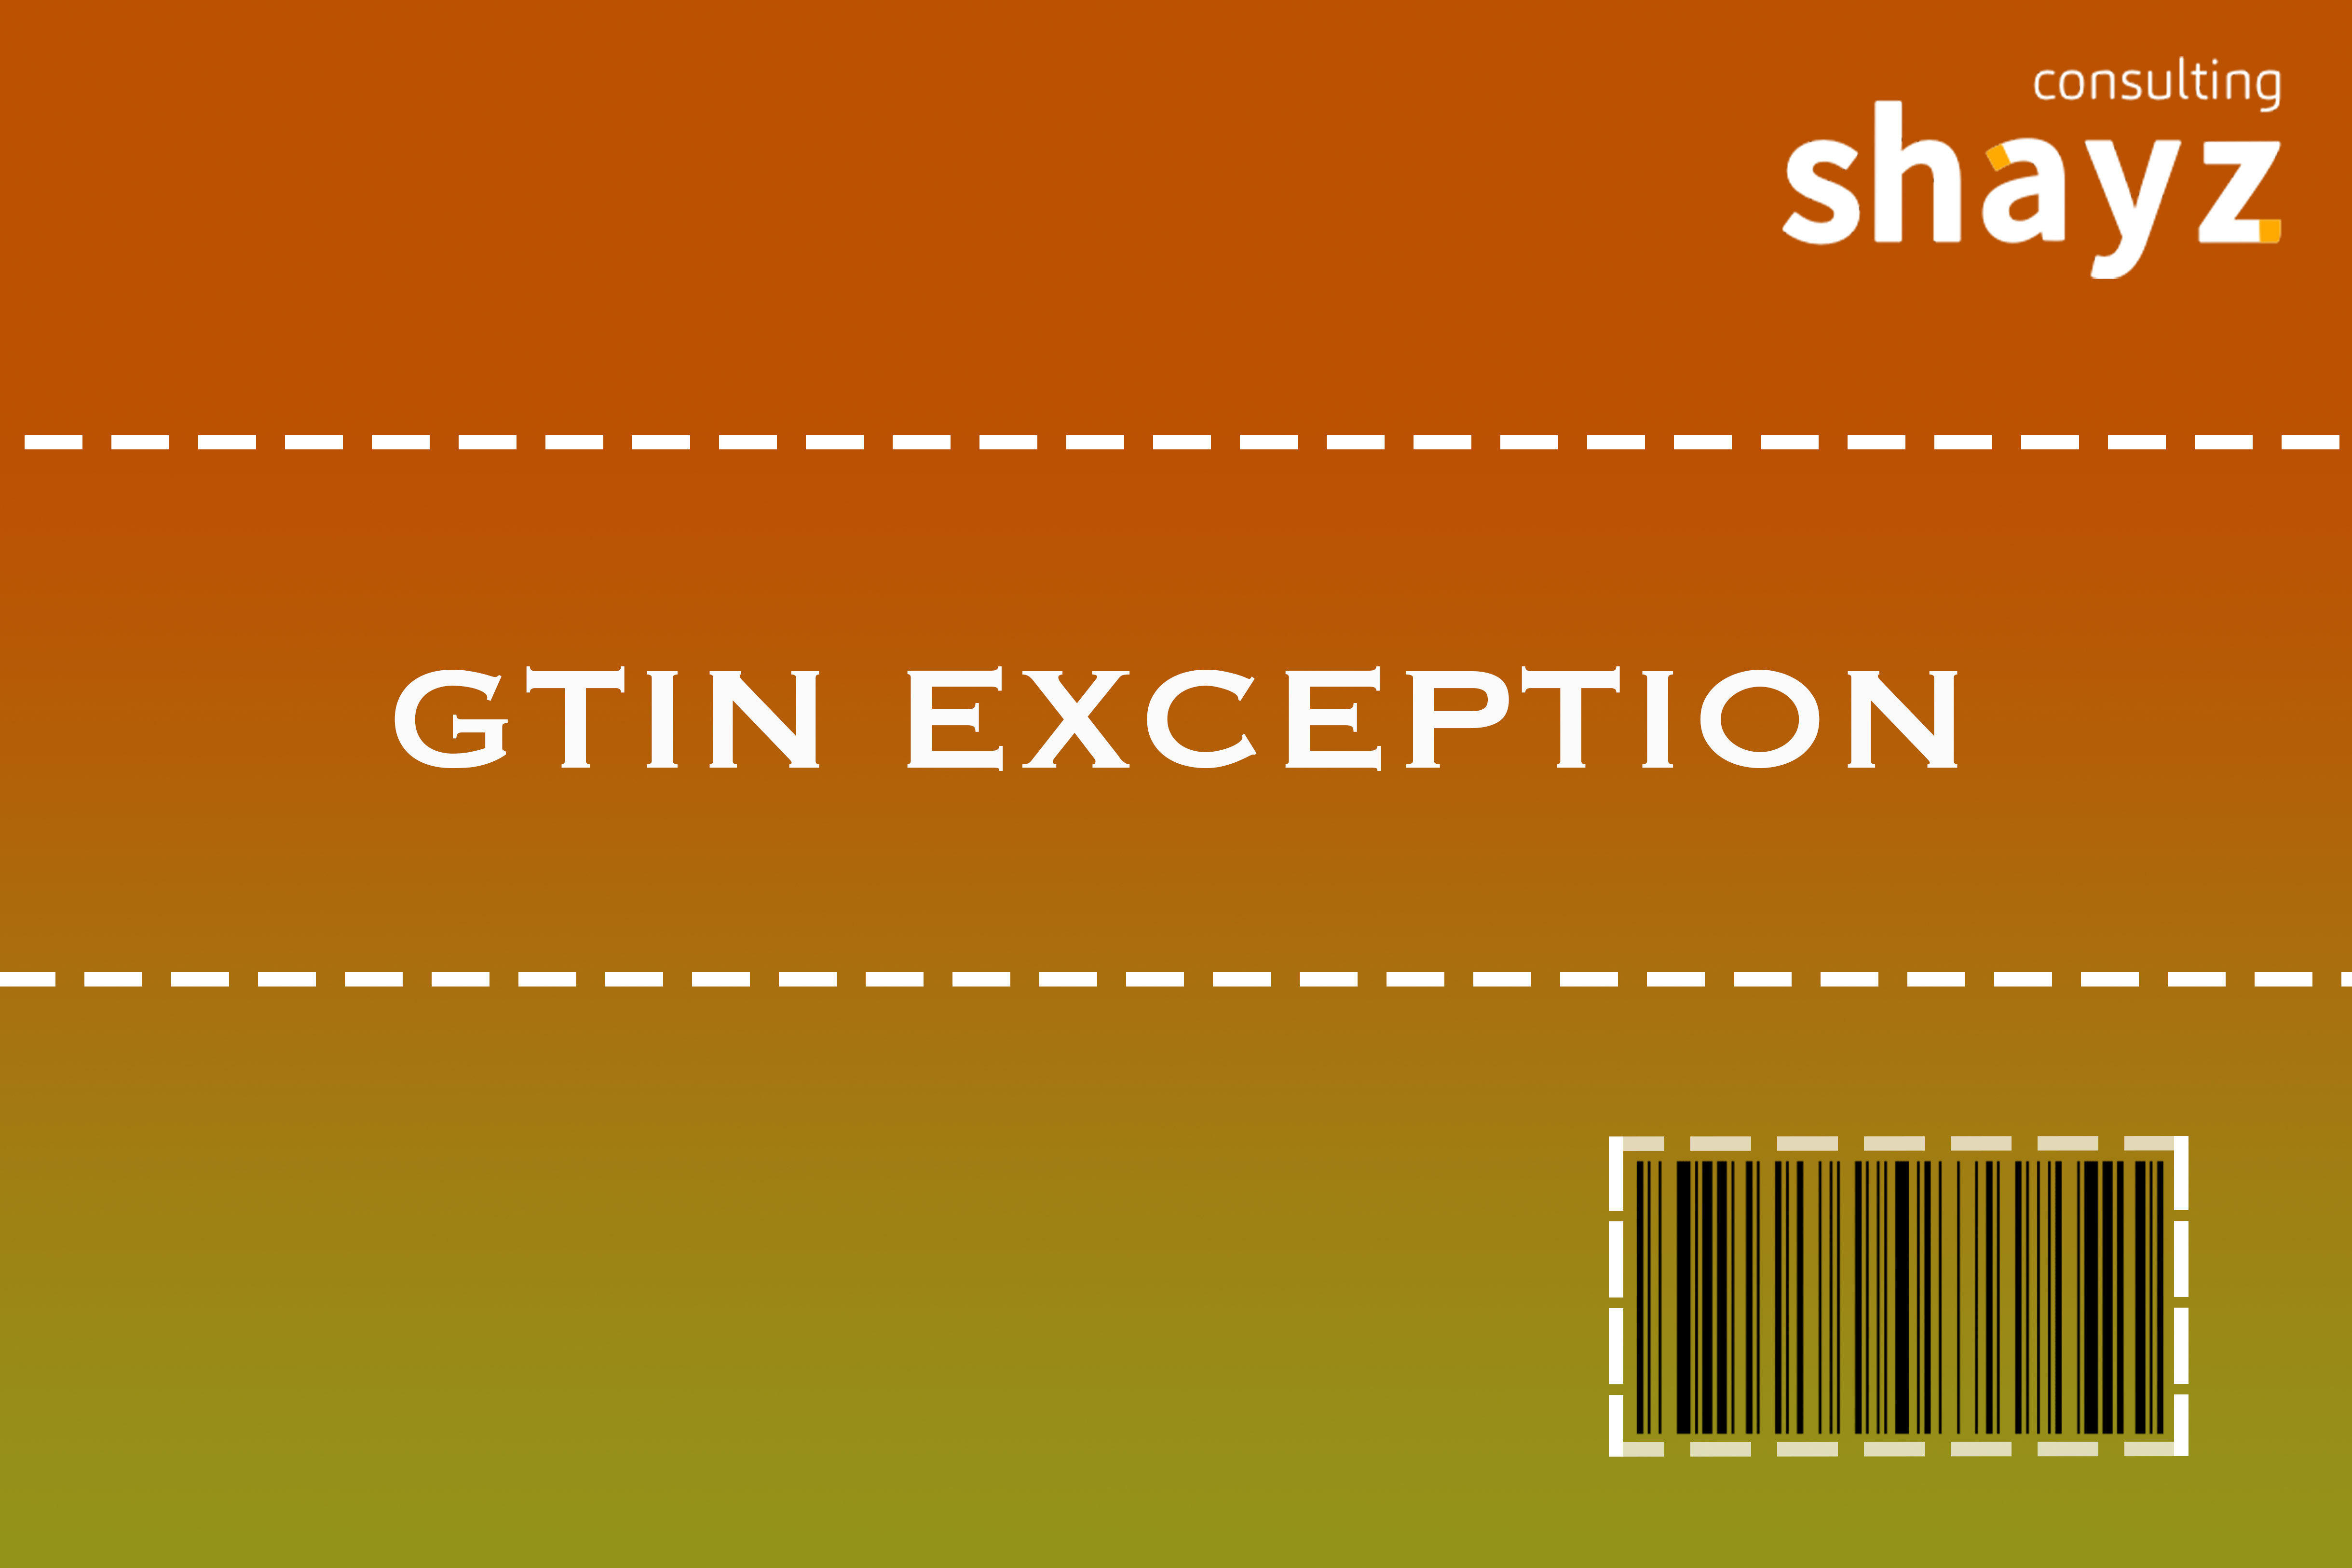 „GTIN Exception“ programa